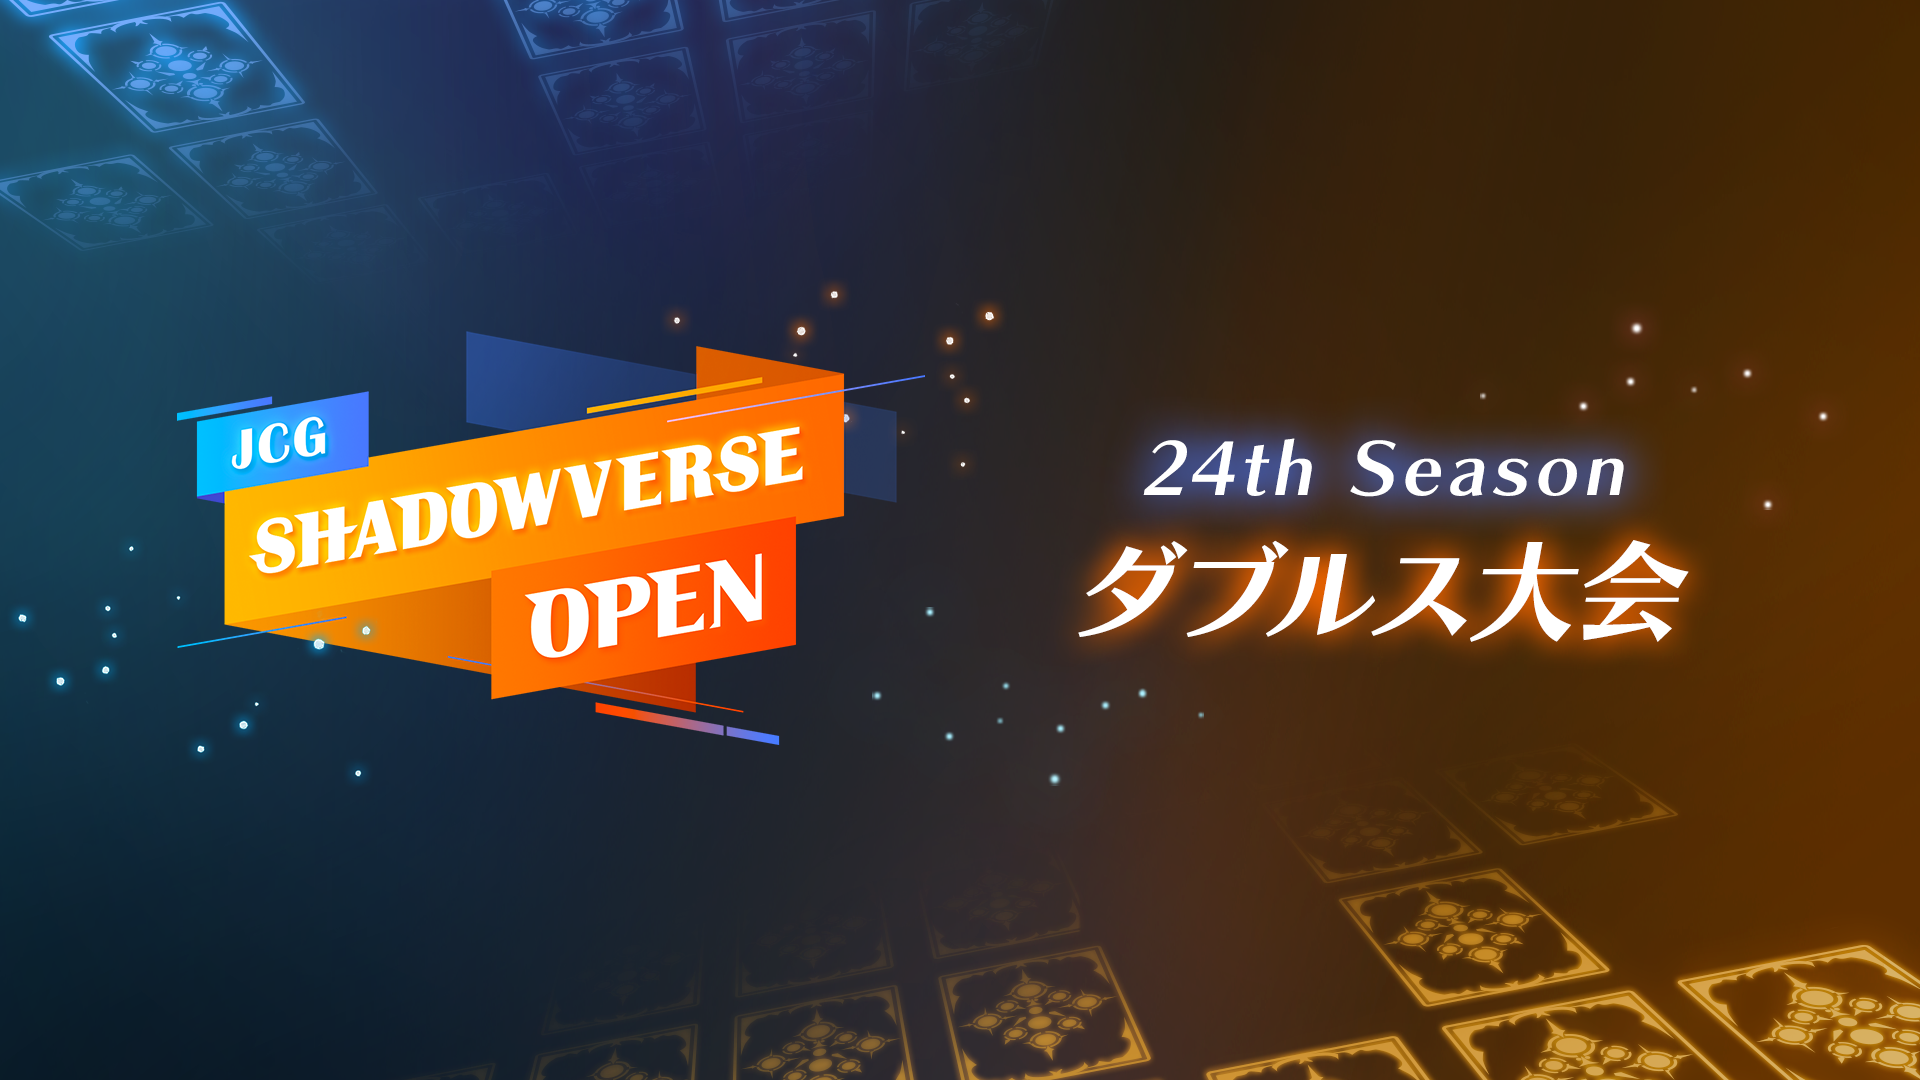 JCG Shadowverse Open 24th Season ダブルス大会 結果速報